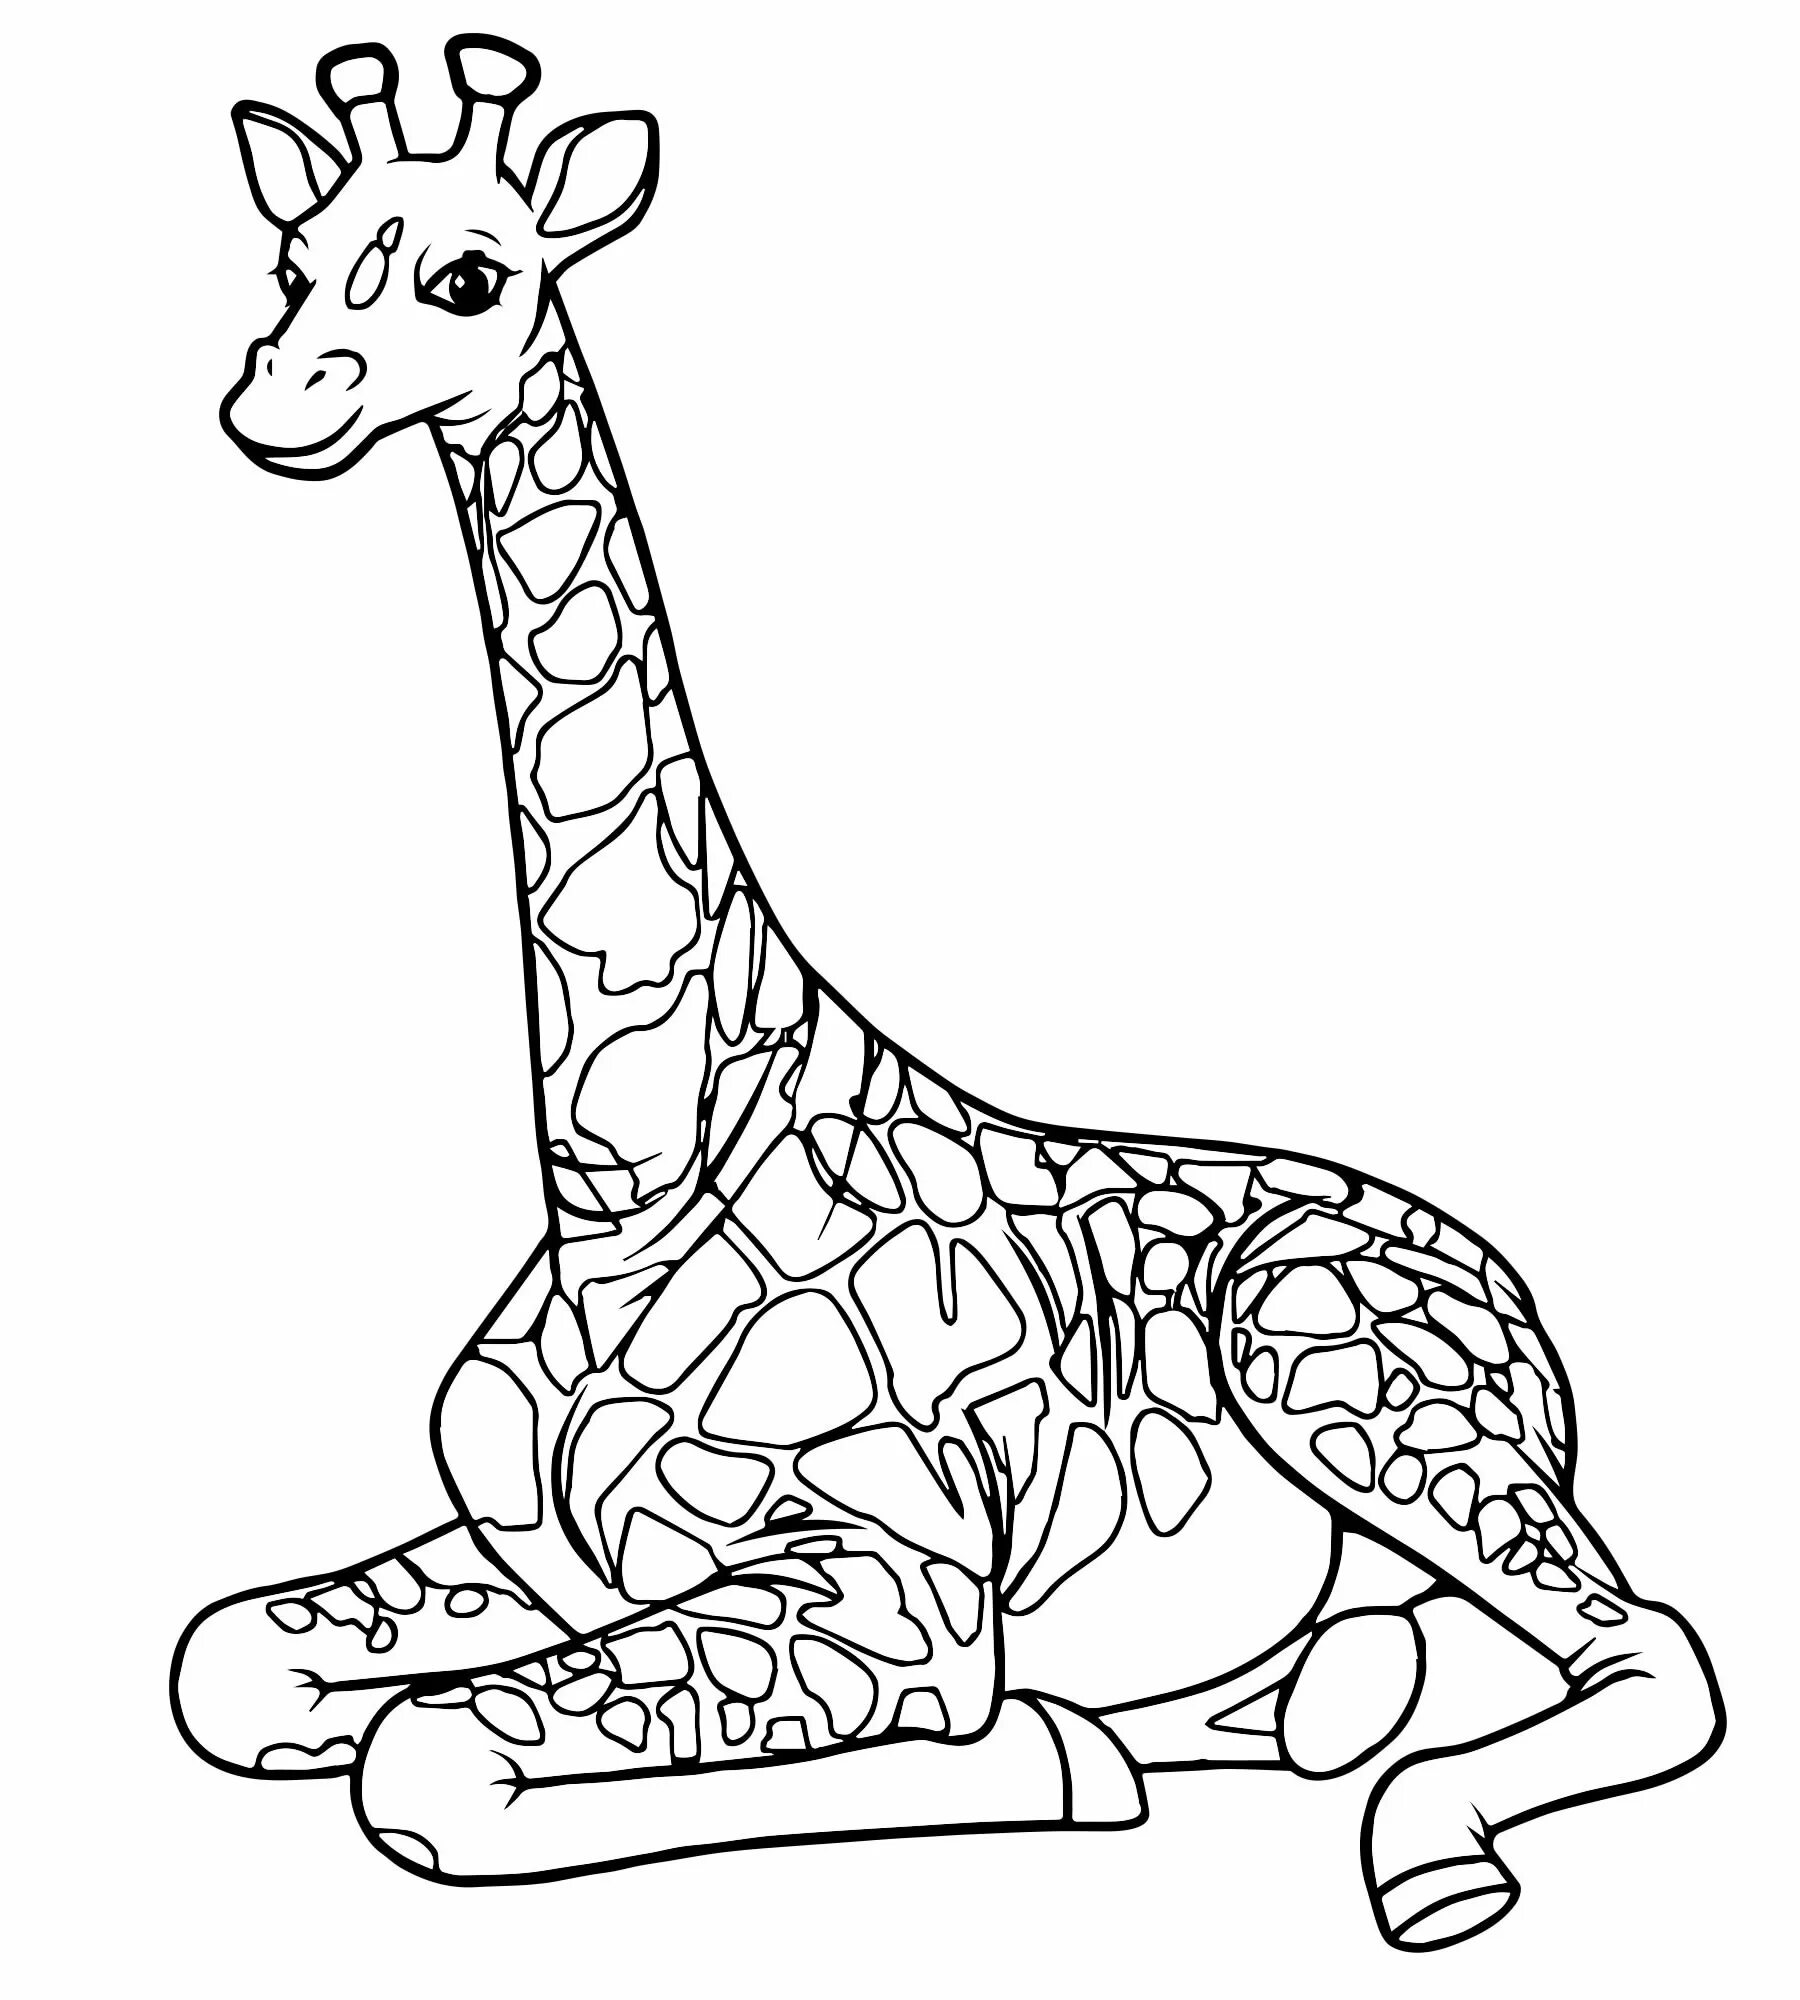 Giraffe pattern for kids #2